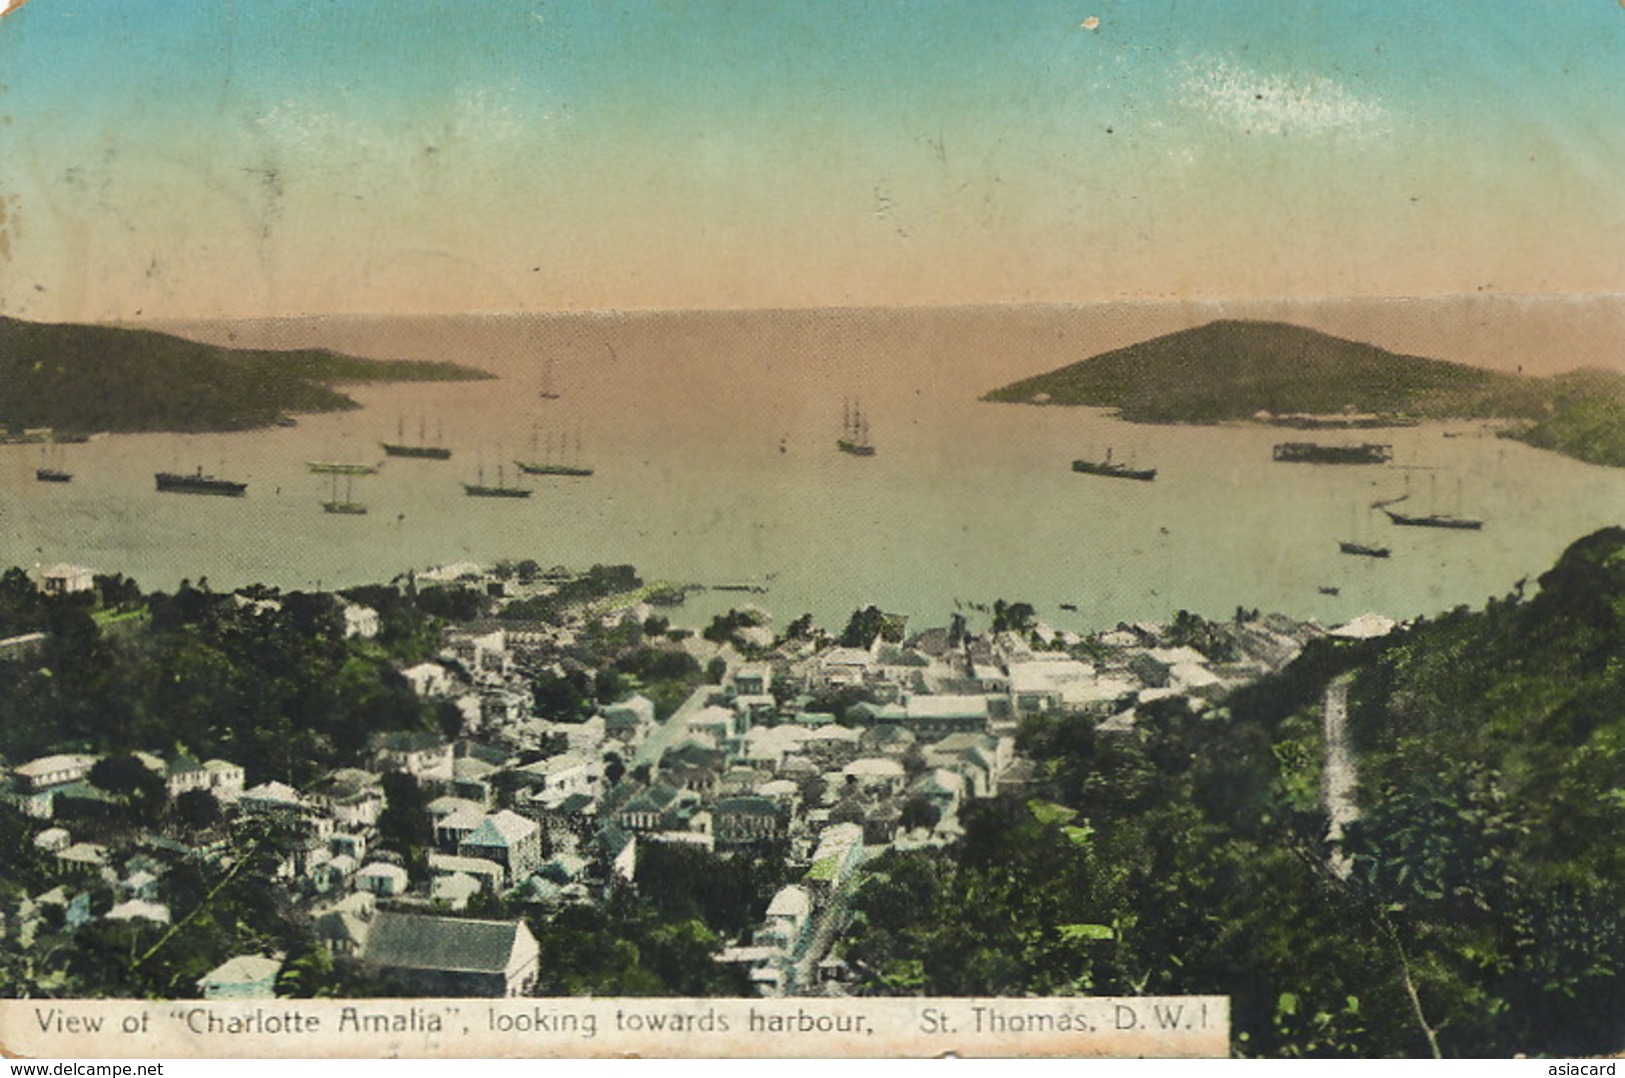 View Of " Charlotte Amalia " Looking Towards Harbour St Thomas D.W.I. Taylor P. Used To Jacmel Haiti 1912 - Vierges (Iles), Amér.